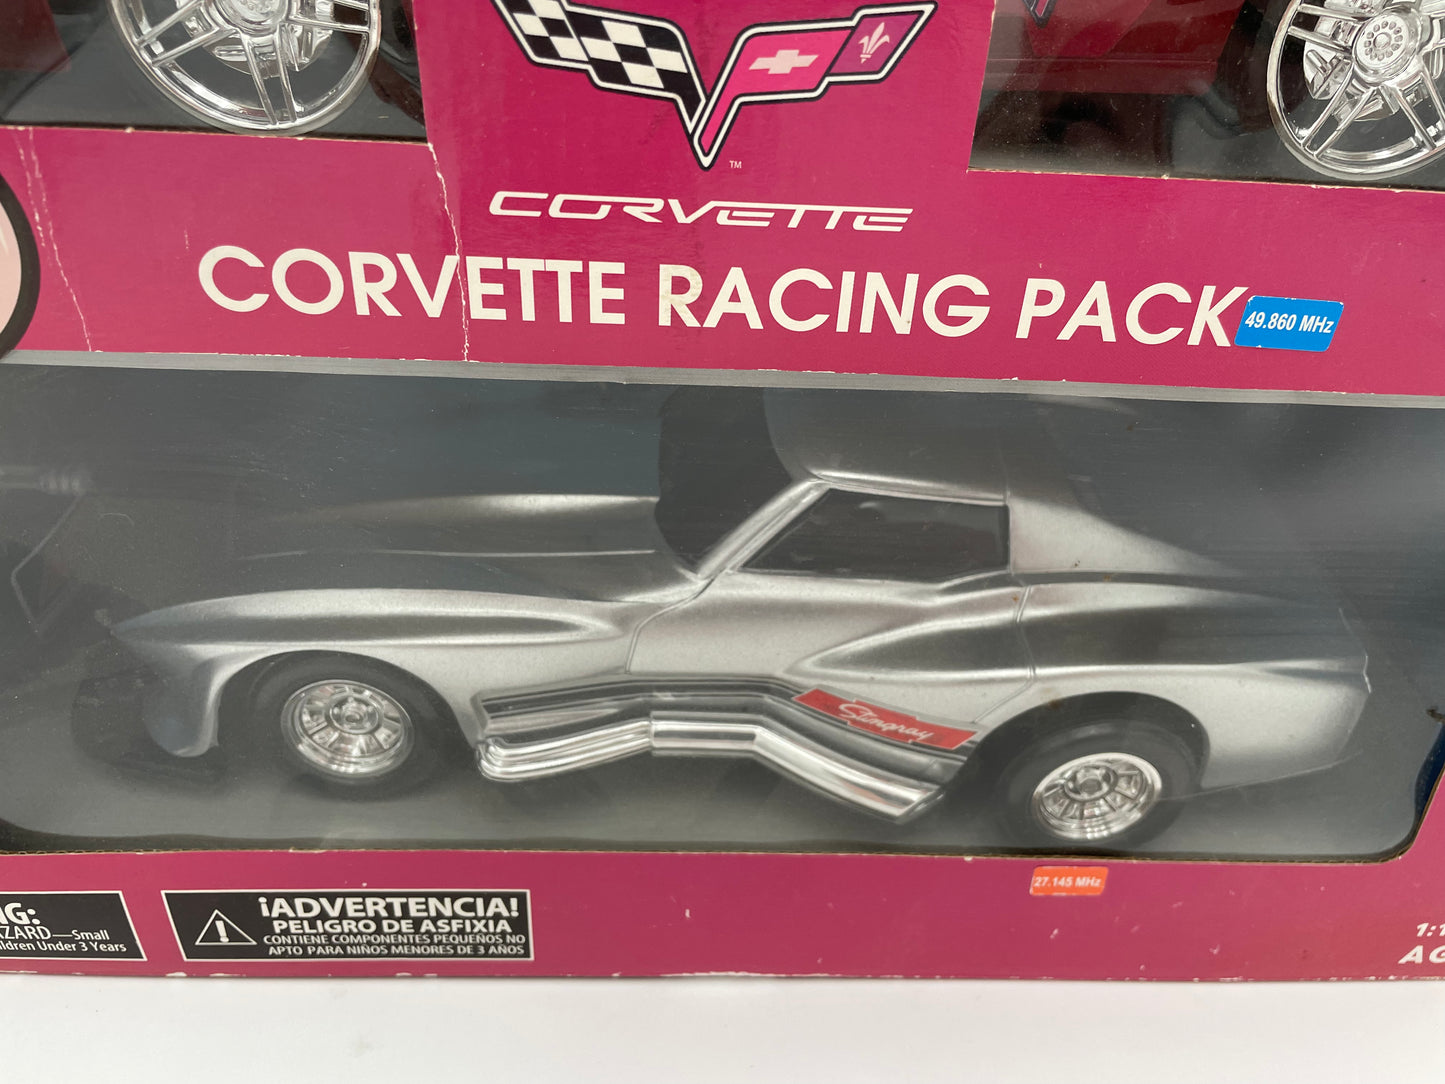 Radio Shack - Corvette Racing Pack - 1:15 Scale - 1990s? #102706